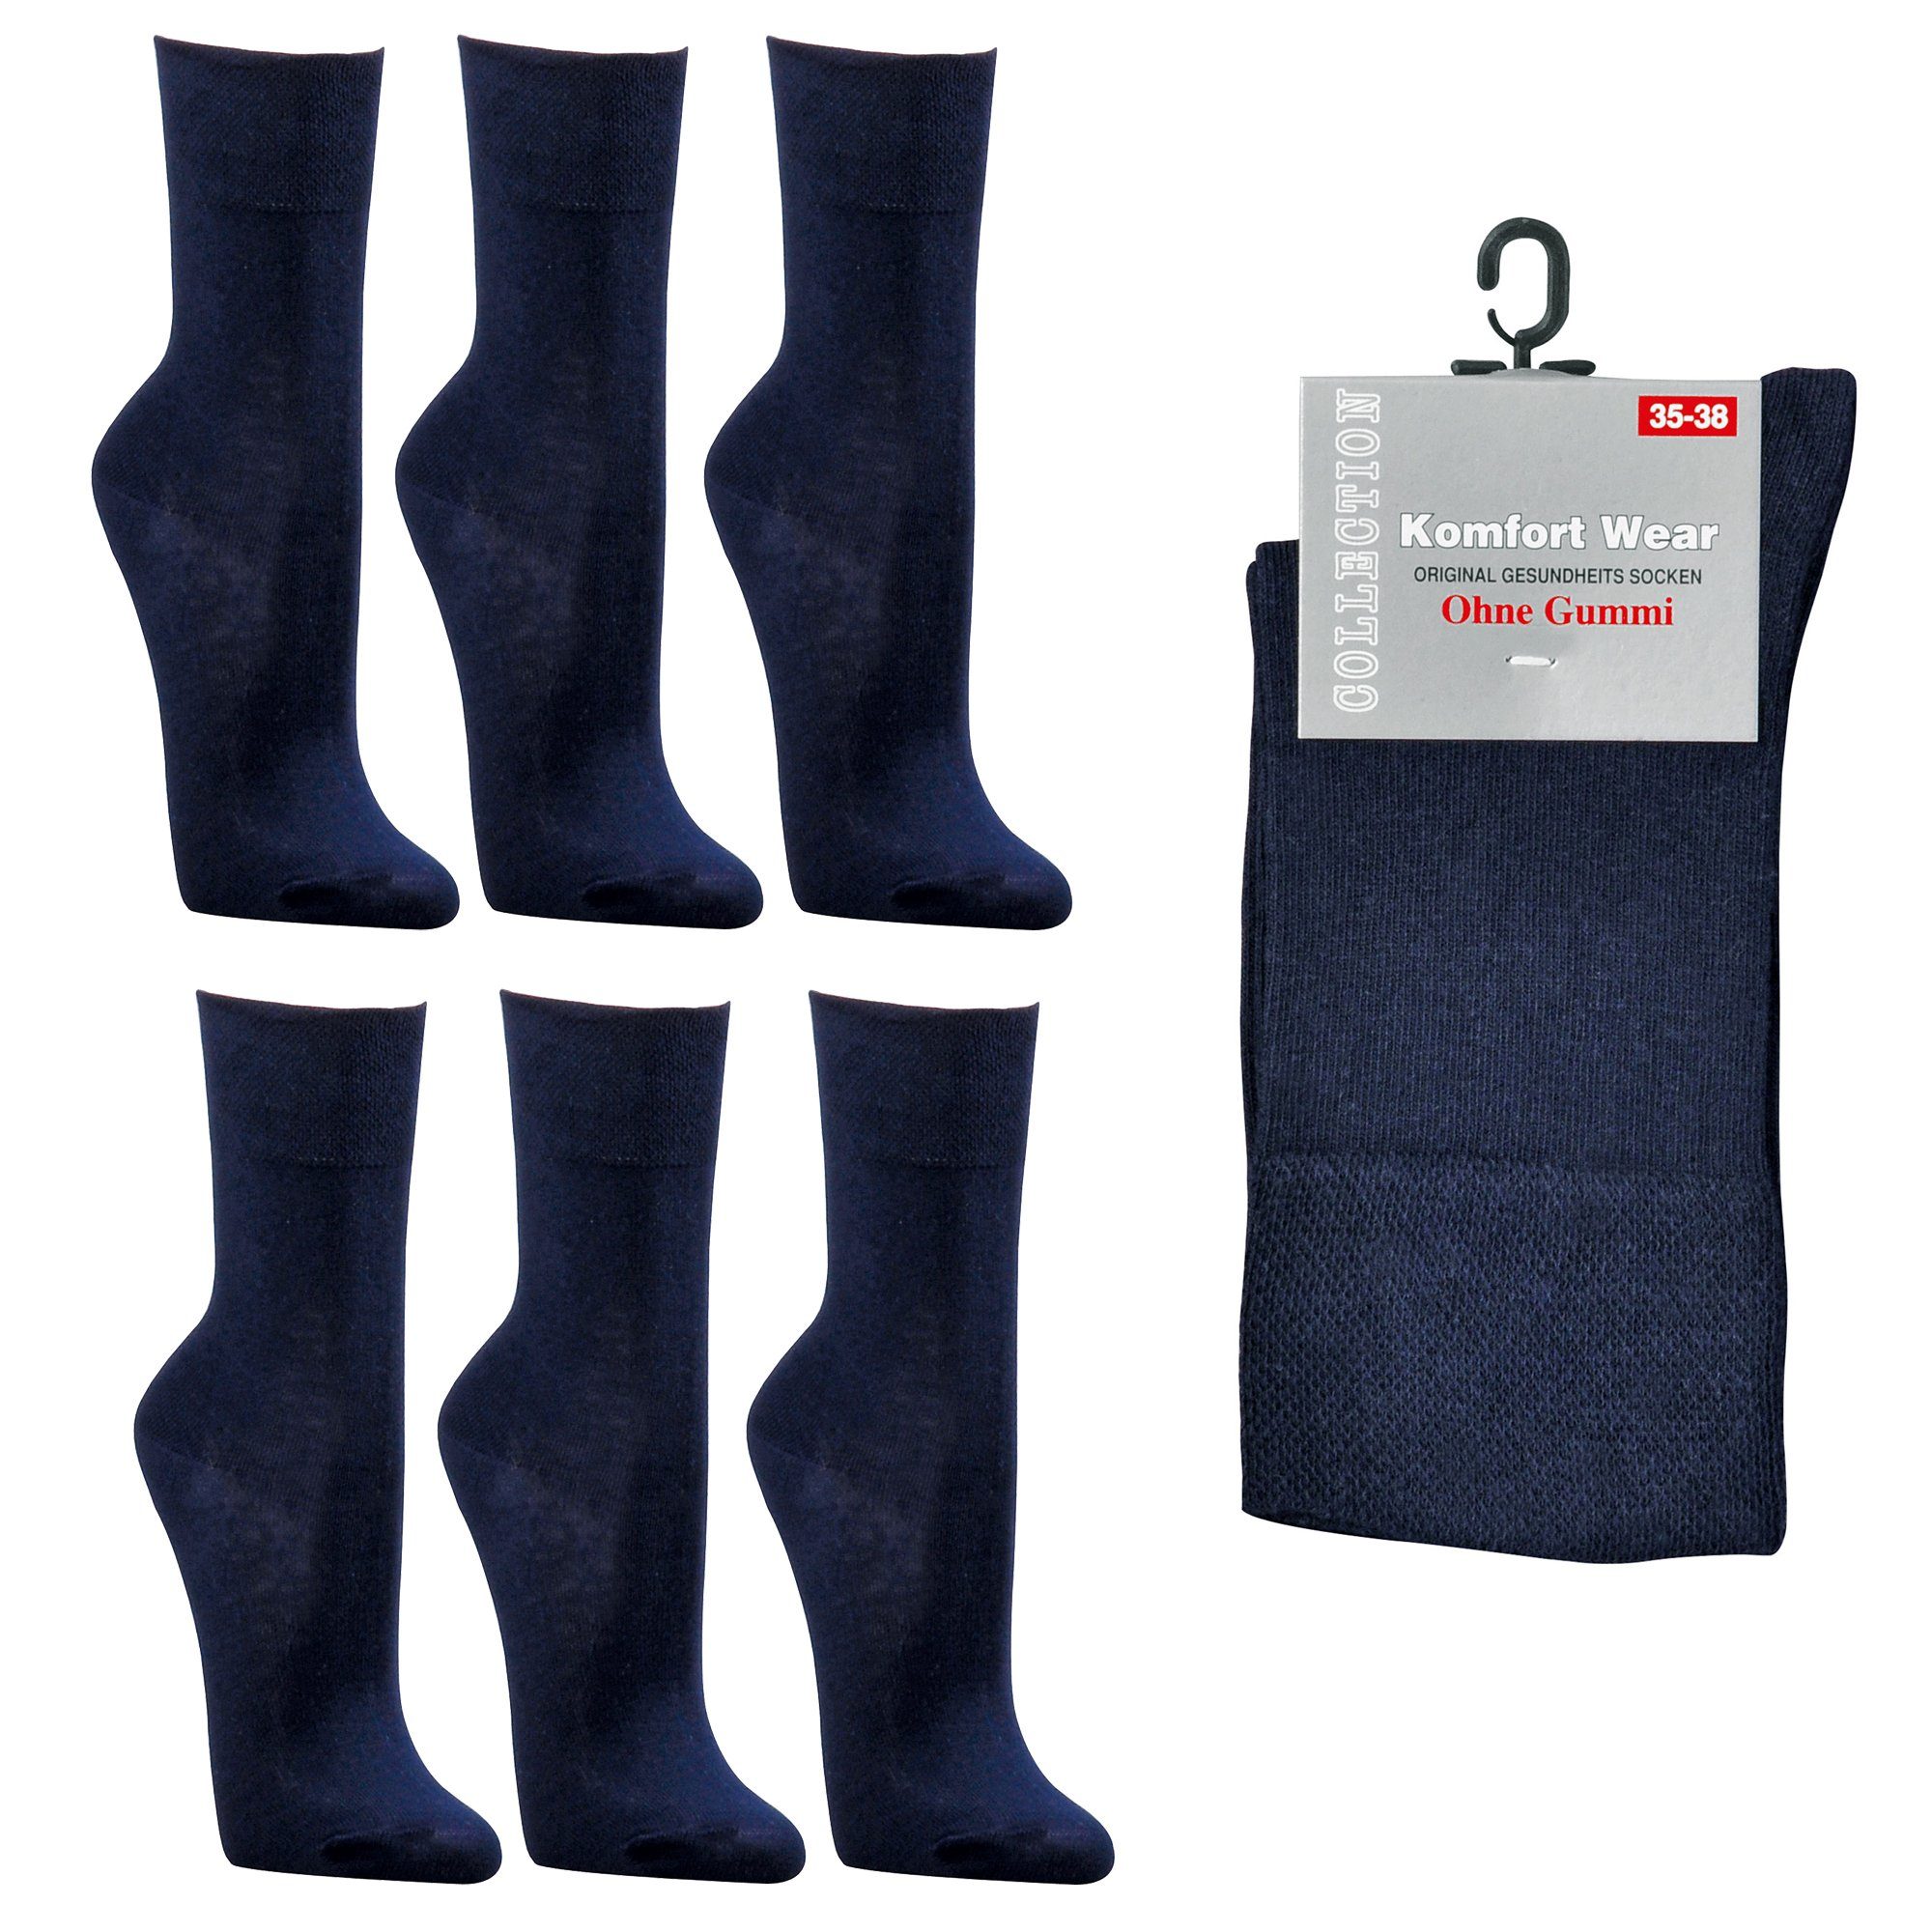 Socks 4 Fun Langsocken 2162 (Packung, 6-Paar, 6 Paar) Wellness-Socken ohne Gummidruck Herren Damen Socken Komfortbund marine